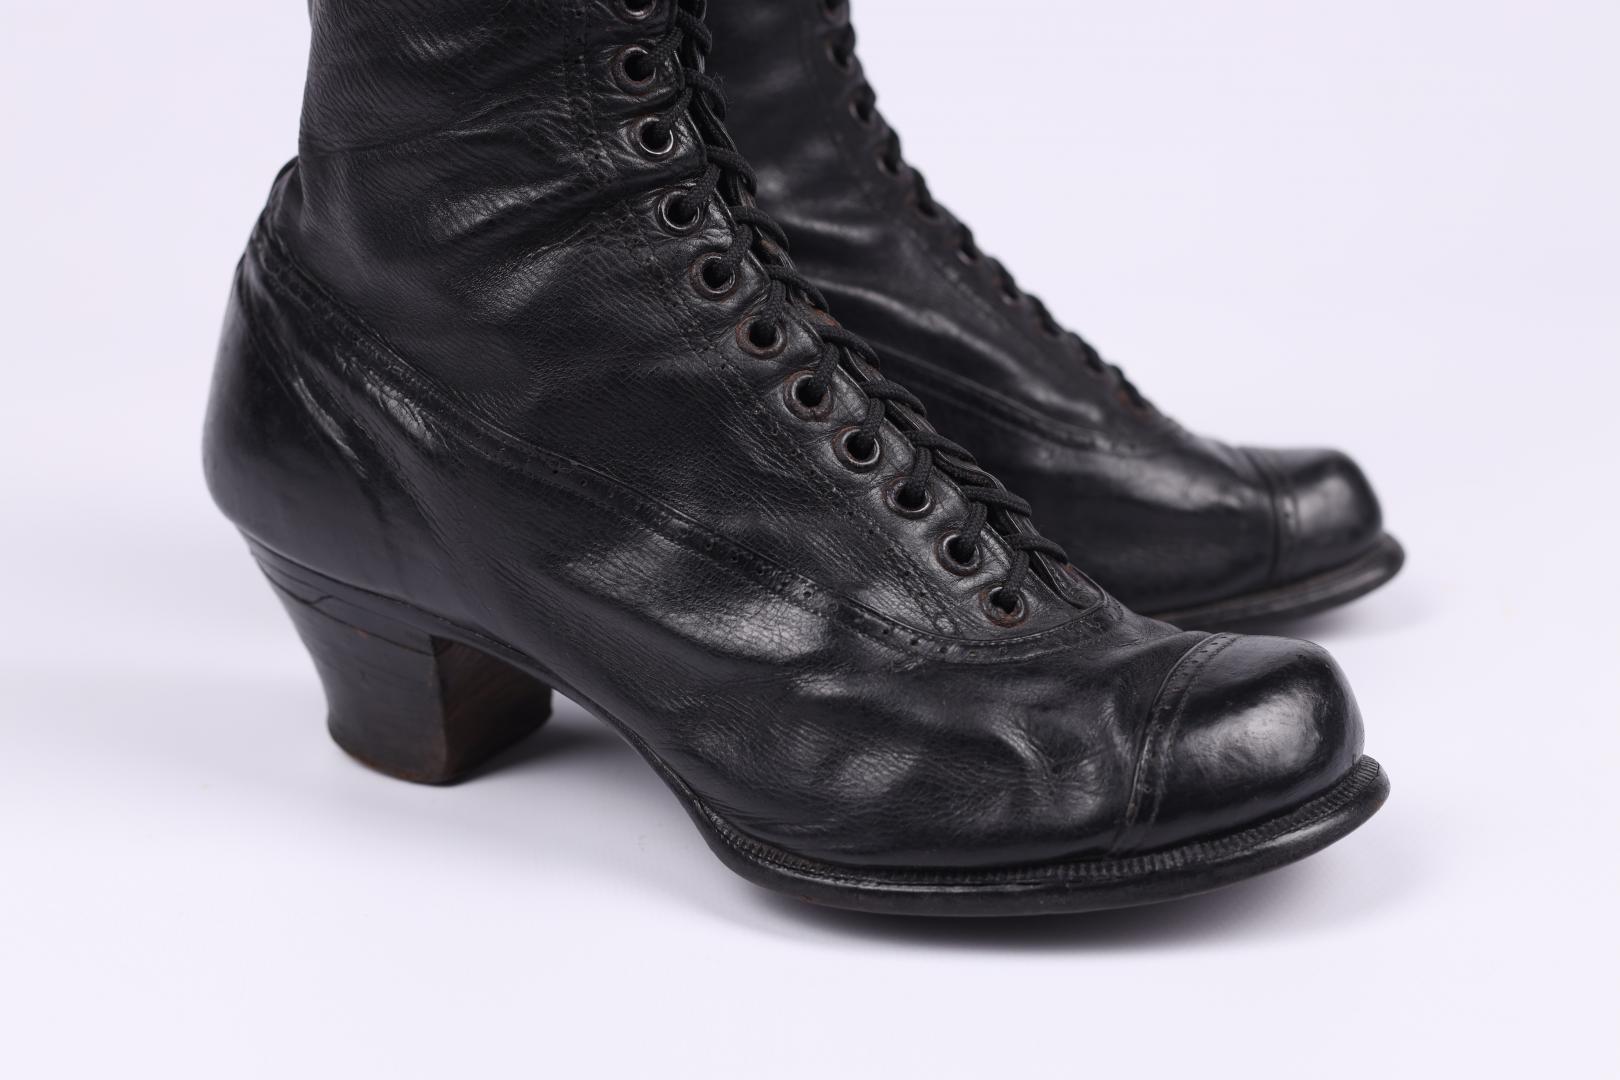 Festive lace-up women's boots